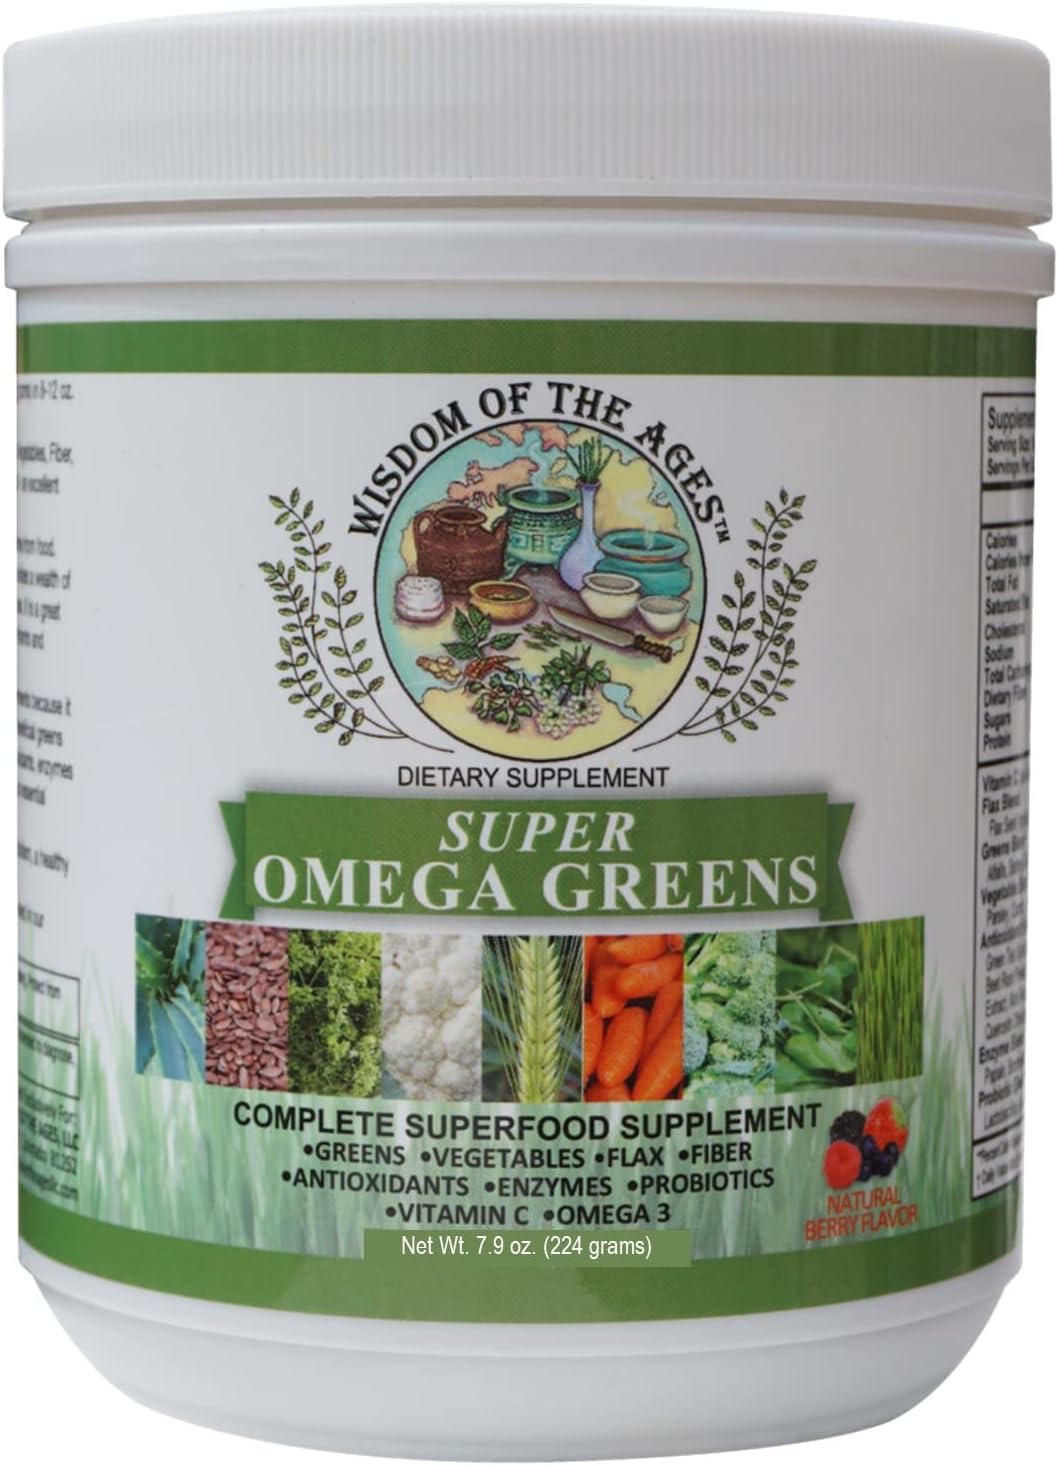 Super Omega Greens Supplement Review